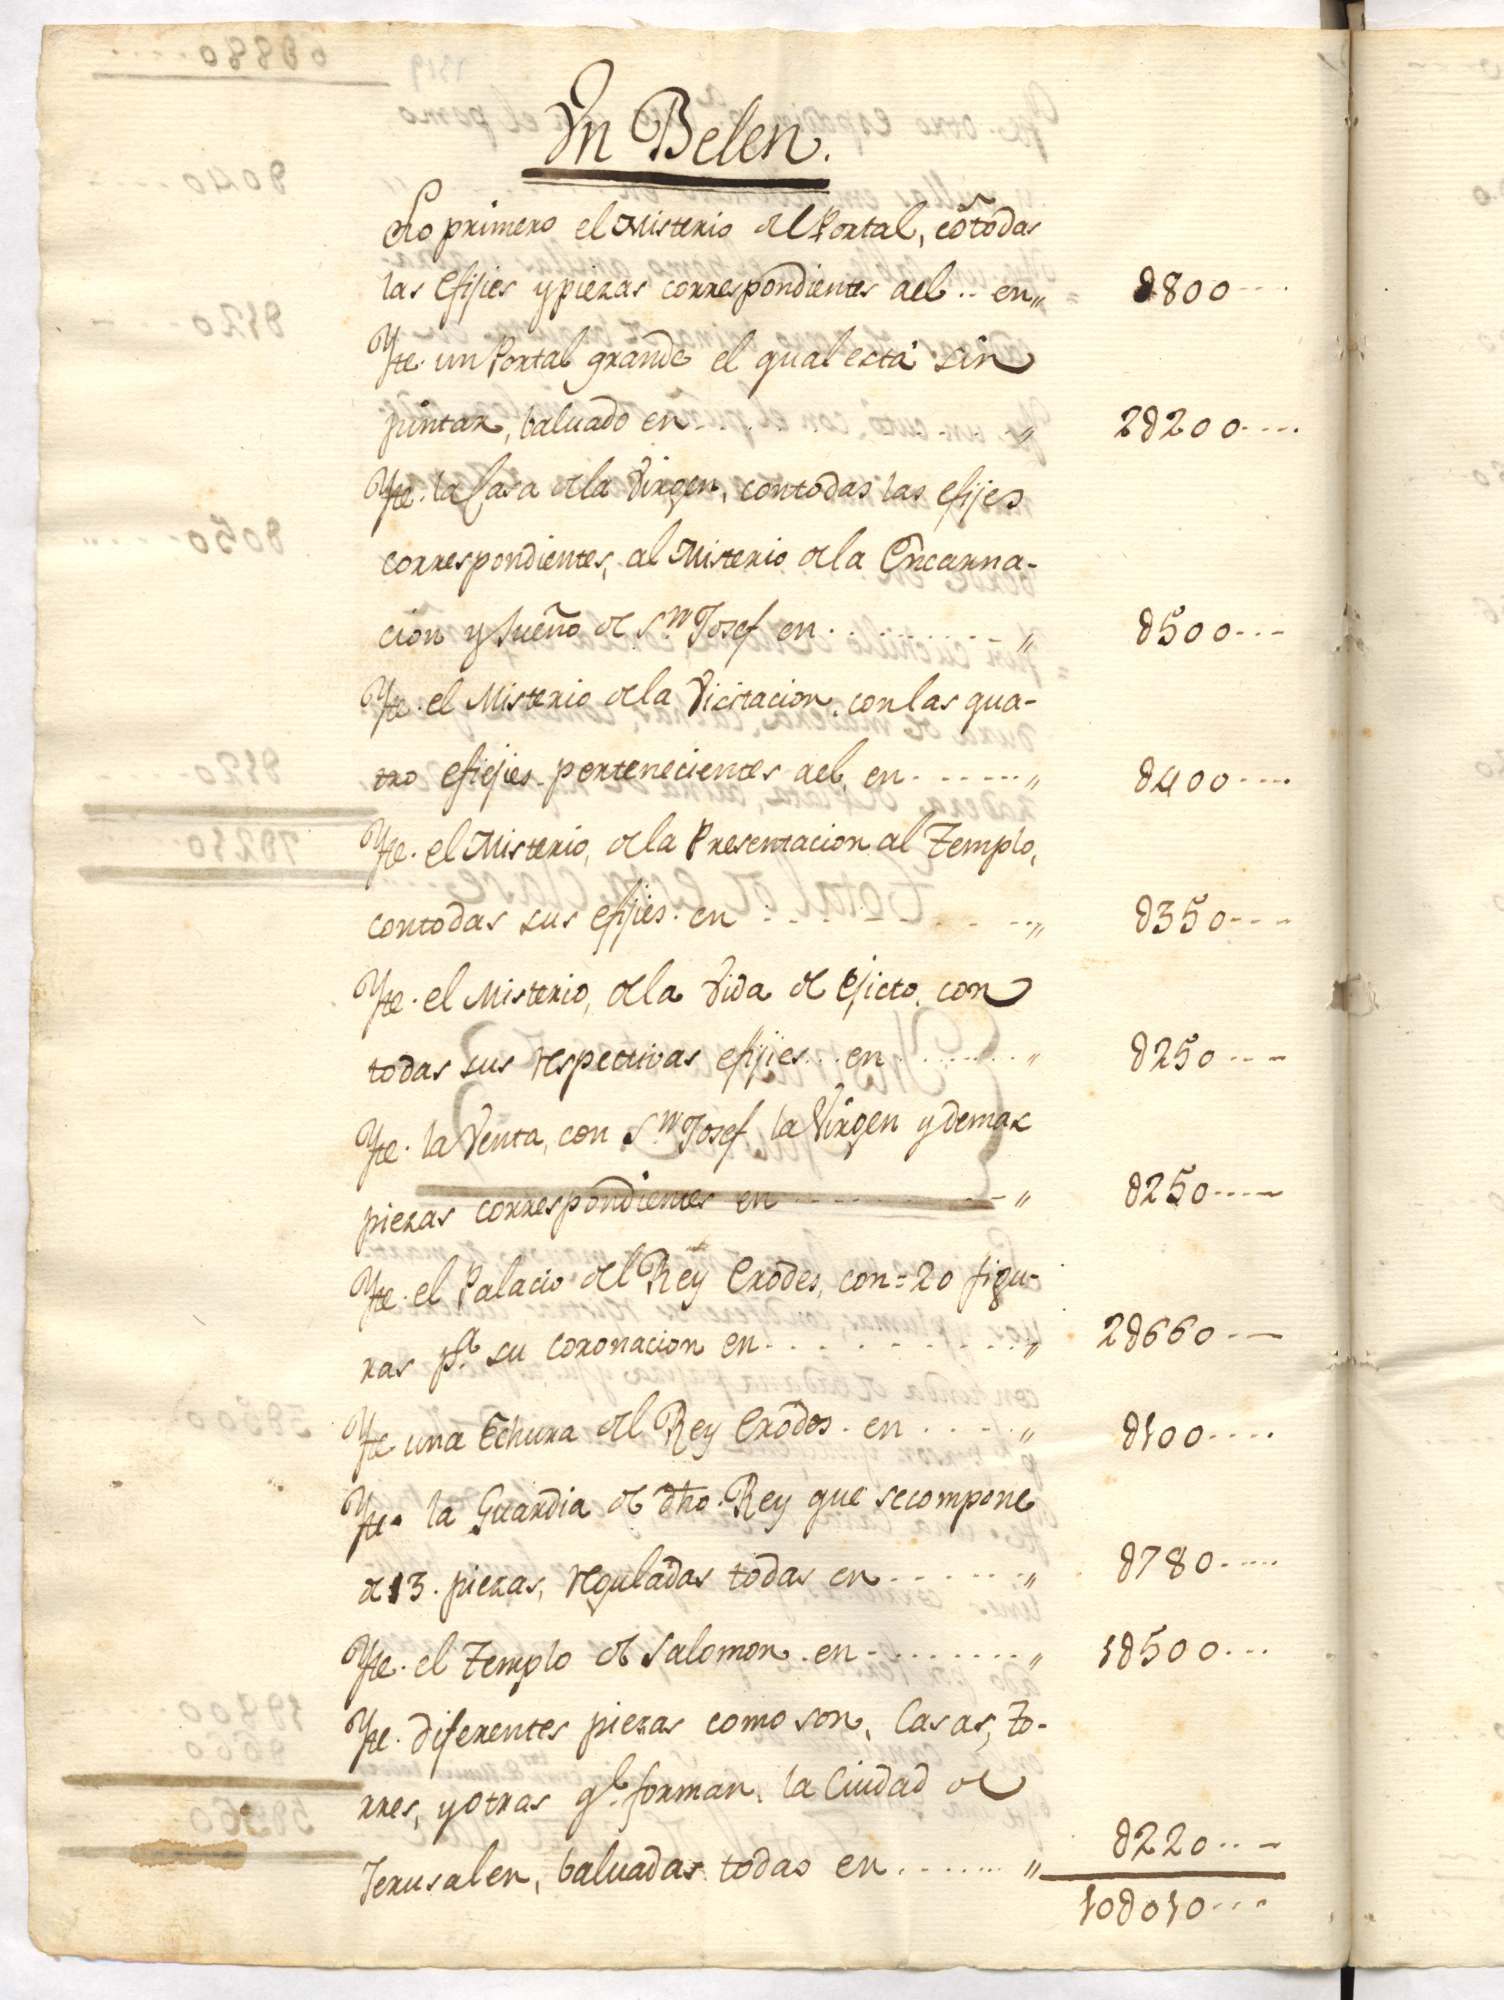 Registro de Juan Mateo Atienza, Murcia de 1800.